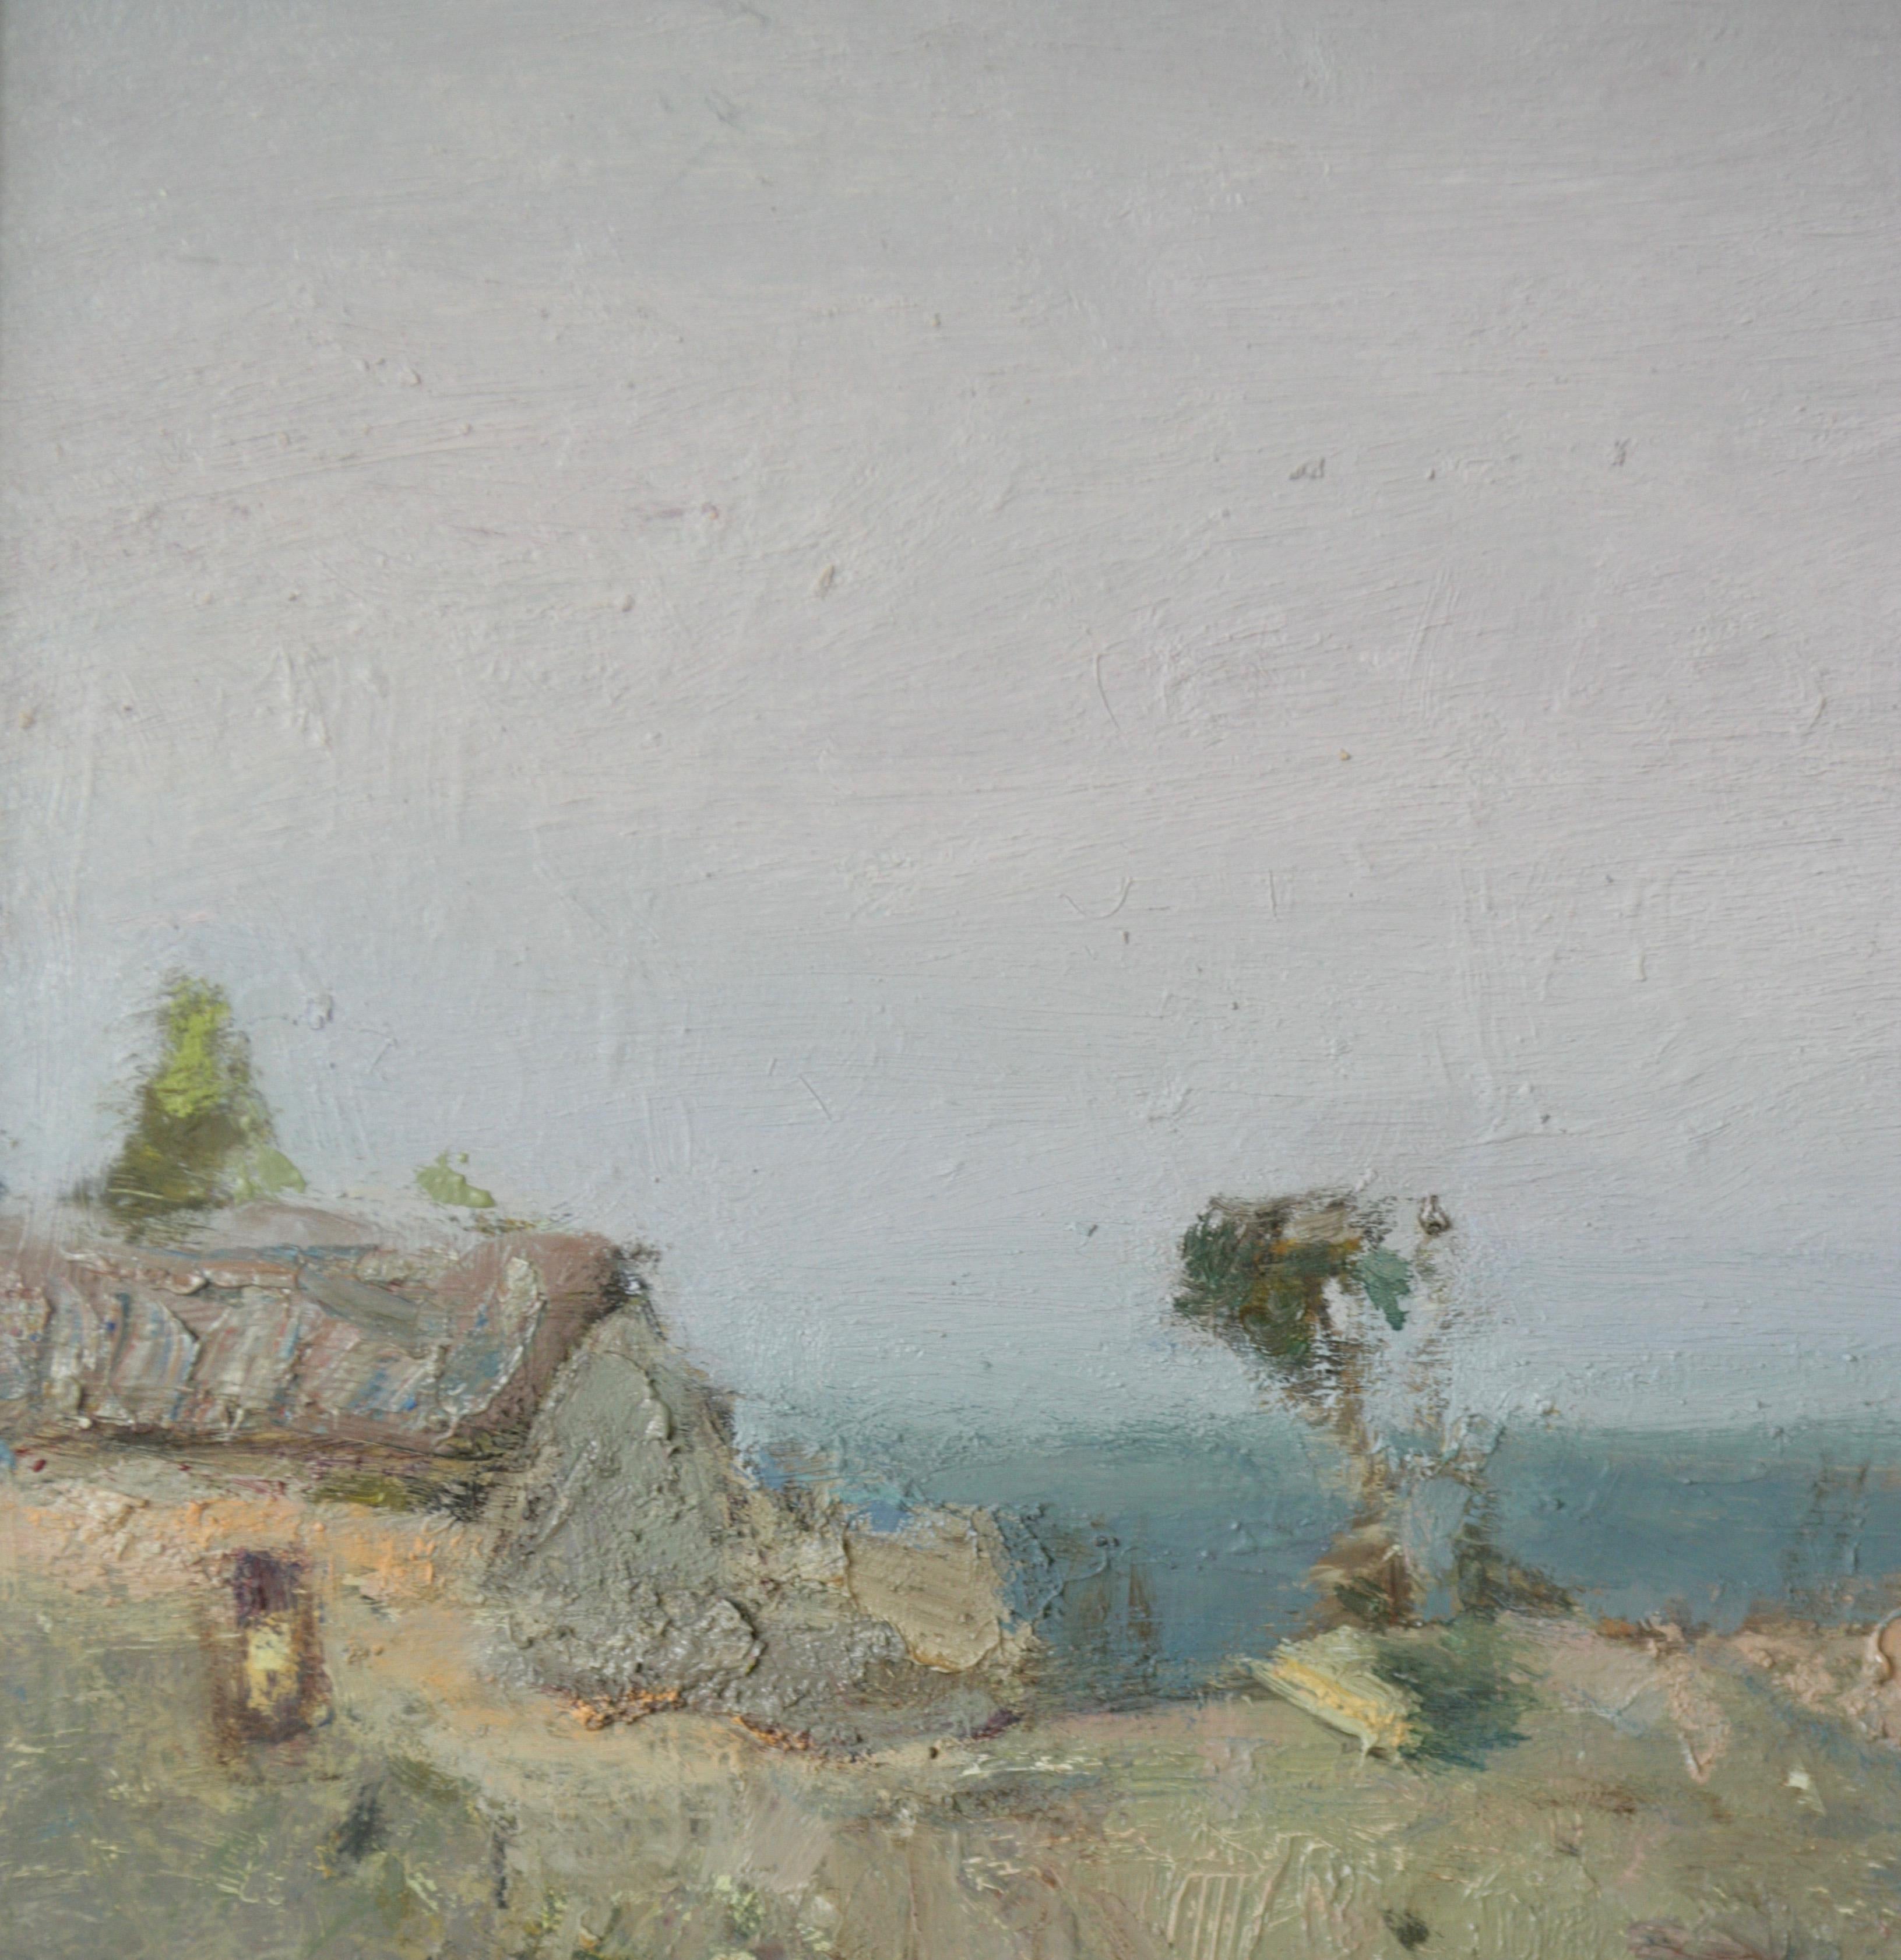 ALMOND BLOSSOM by MOONLIGHT  EDGE OF THE SEA  IGOR SHIPLIN  - Impressionist Painting by Igor Shiplin